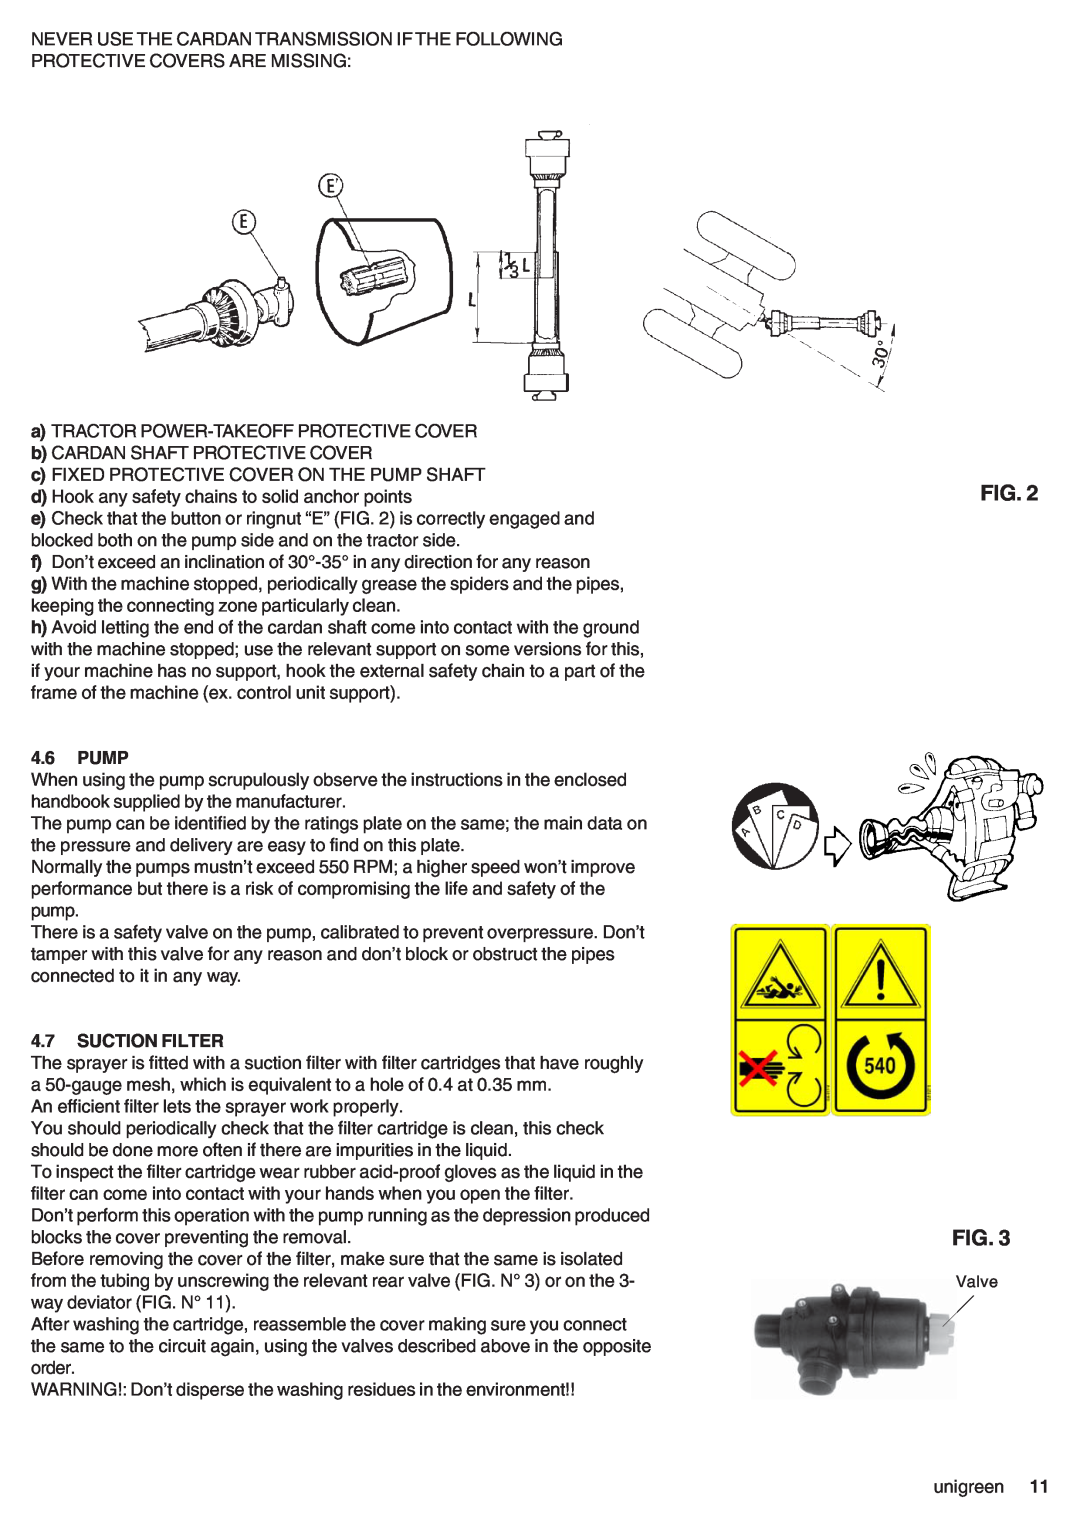 Unigreen CAMPO 11 - 16 - 22 - 32, DSP 11 - 16 - 22 - 32 manual Pump, Suction Filter, Valve 